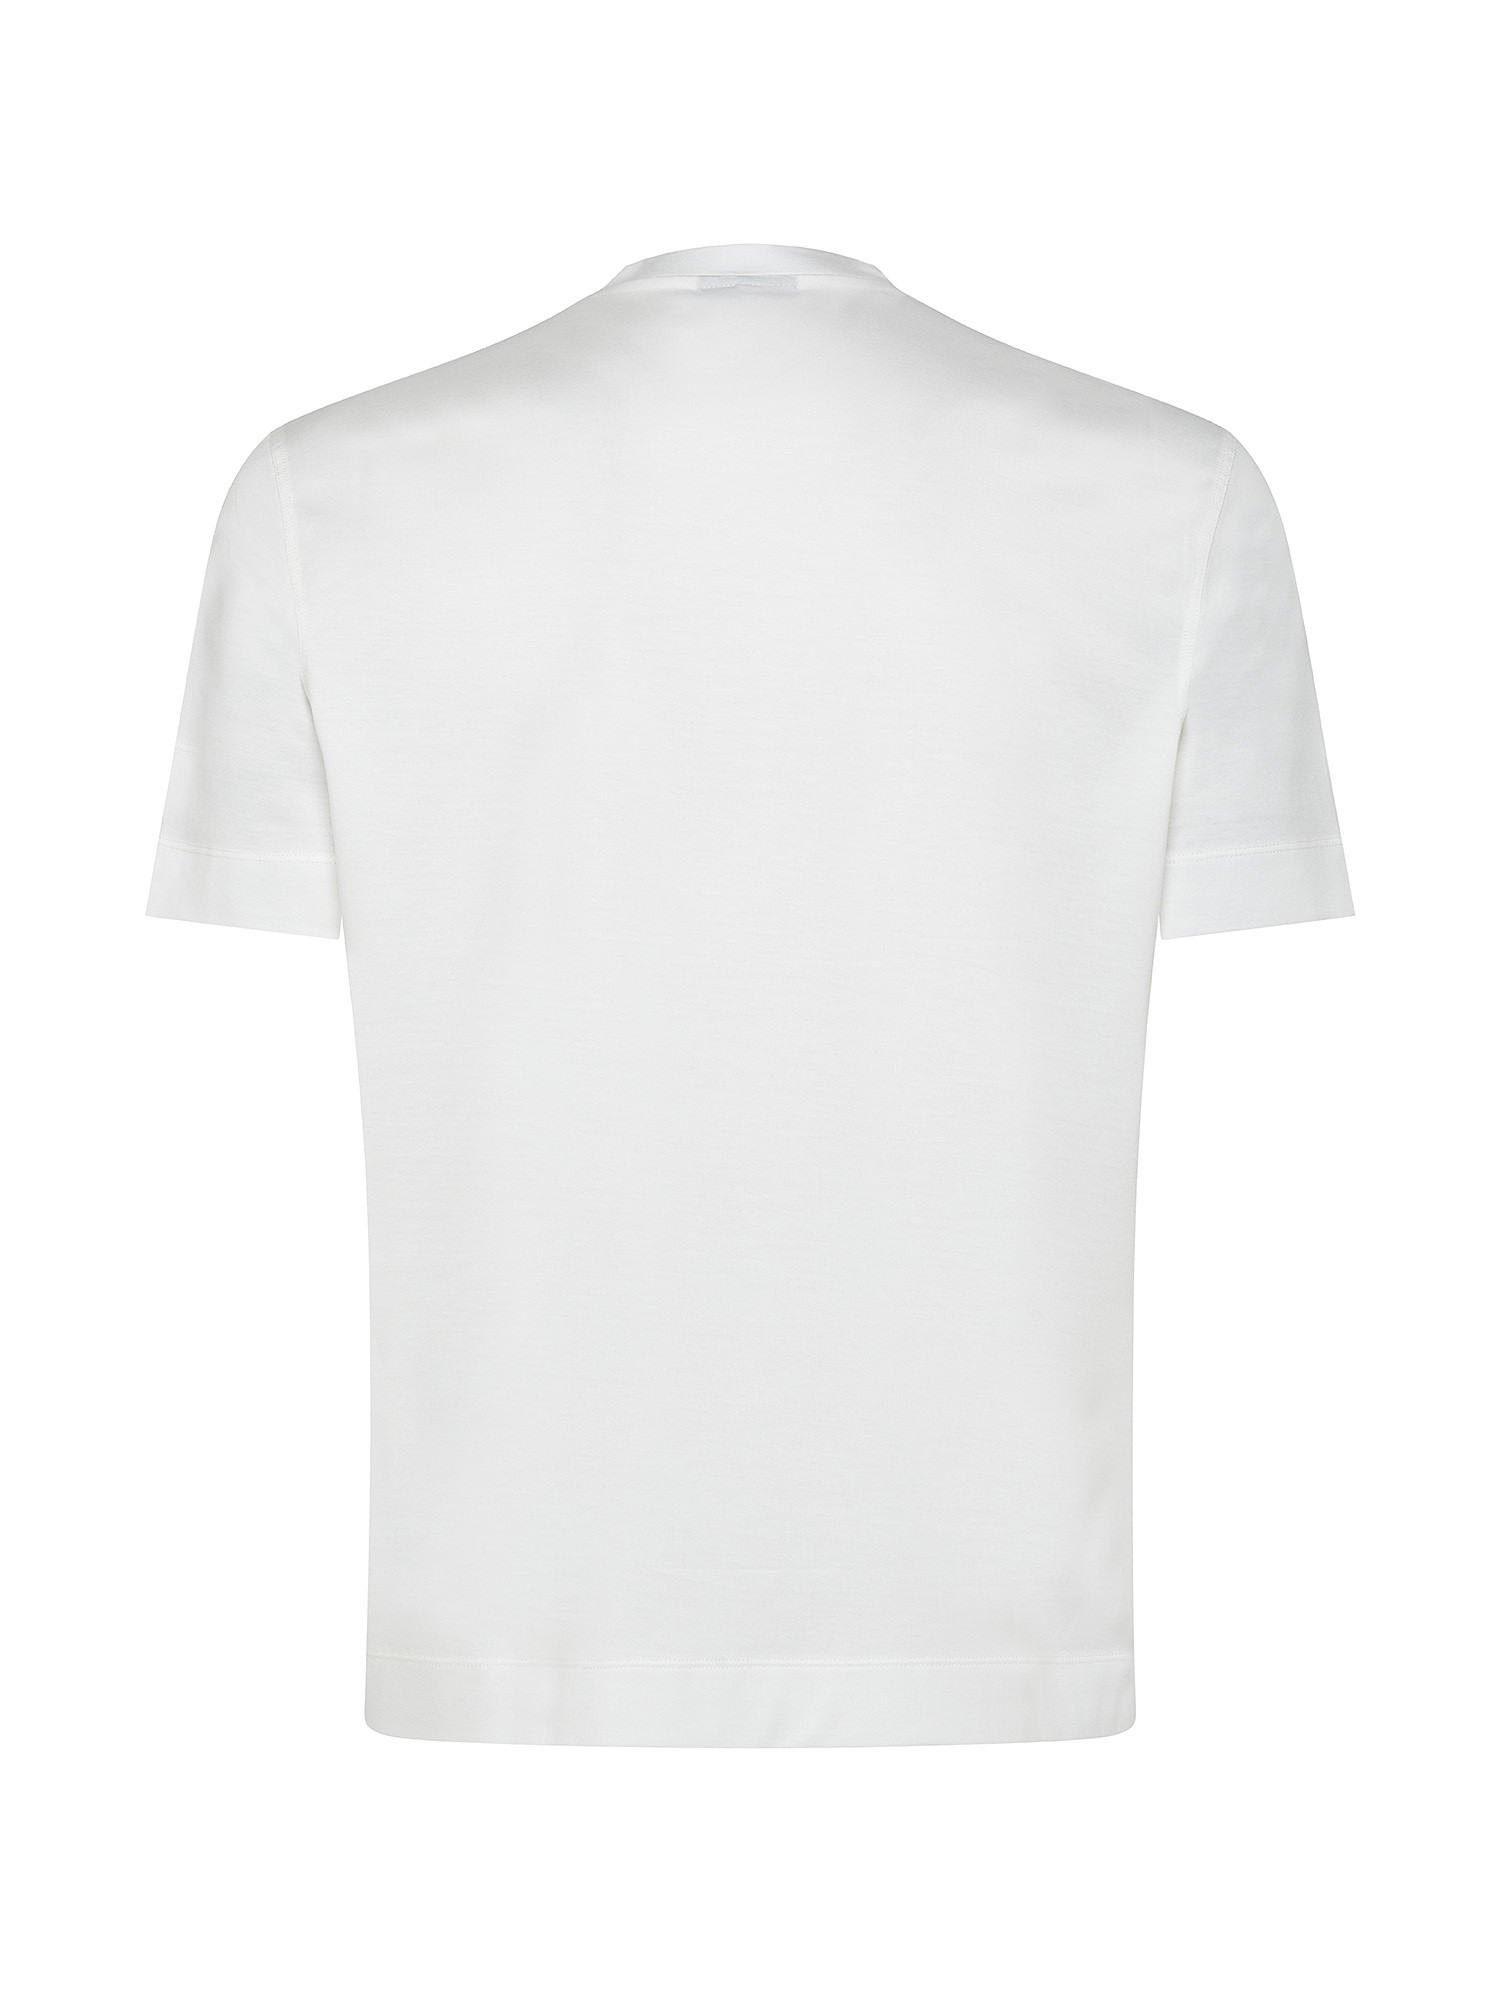 Emporio Armani - T-shirt con logo ricamato, White, large image number 1